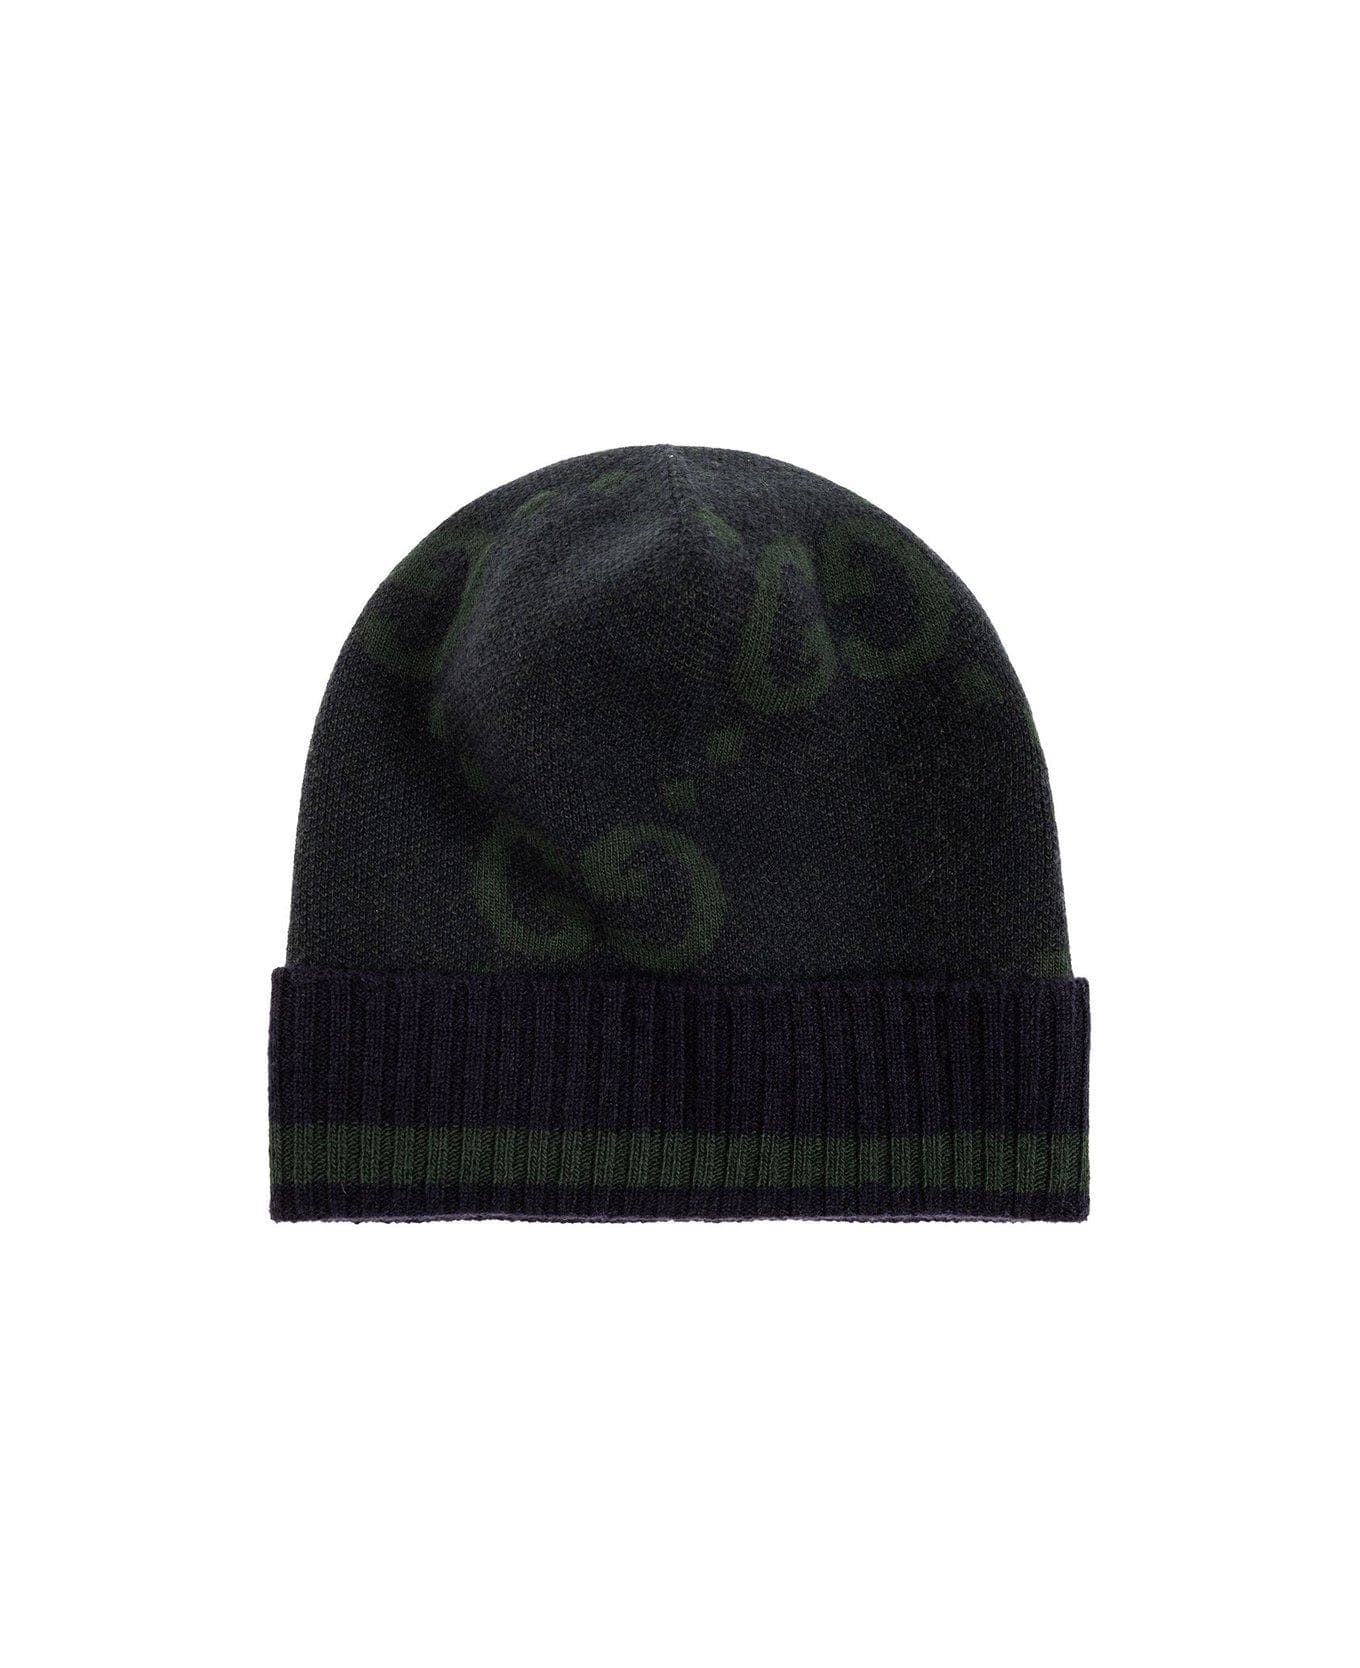 Gucci Monogram Knitted Beanie - Navy/dark green 帽子